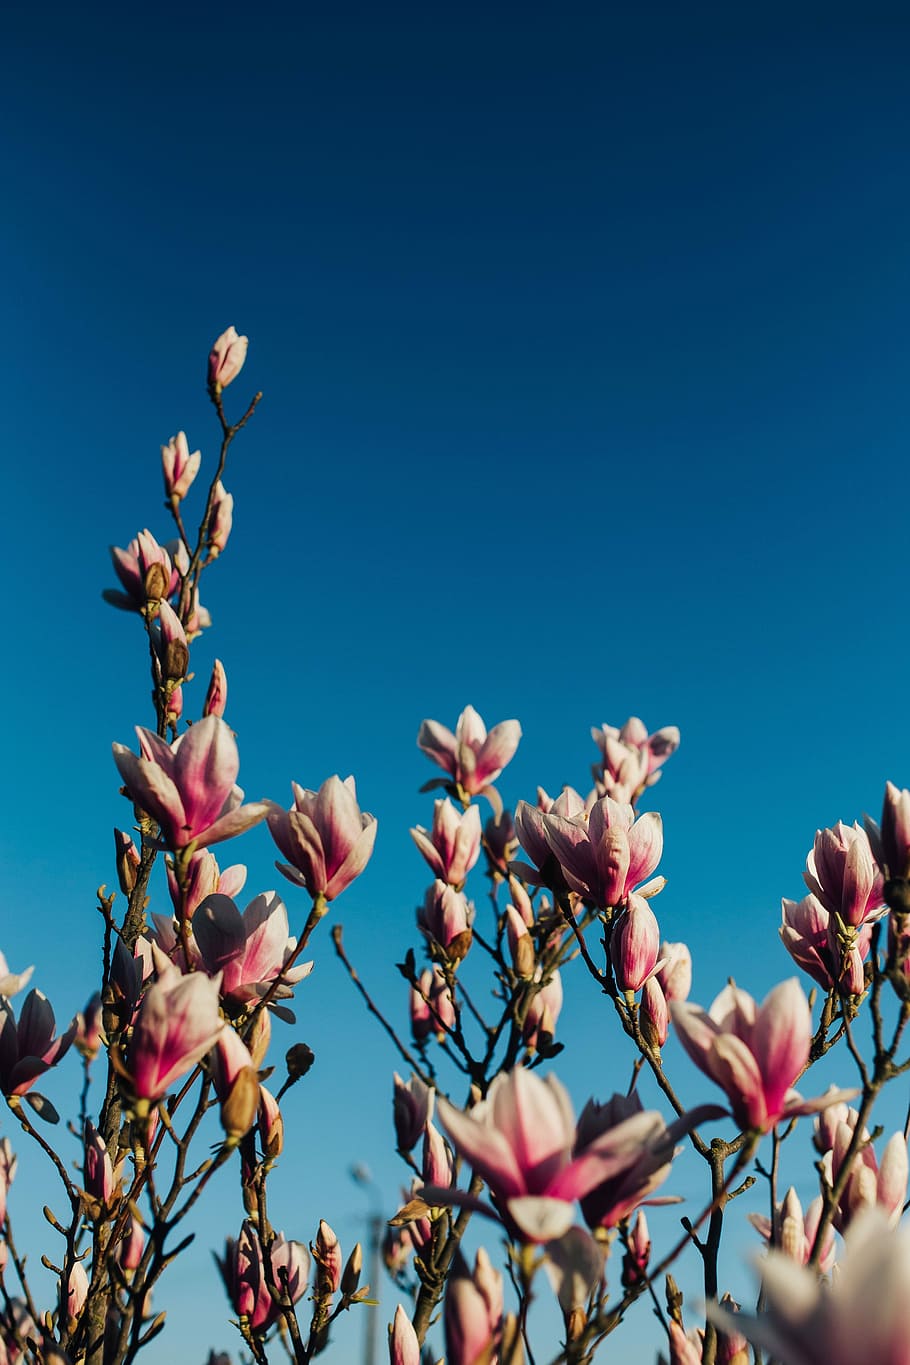 White Sakura Flowers Branch In Blue Sky Background HD Flowers Wallpapers   HD Wallpapers  ID 73138